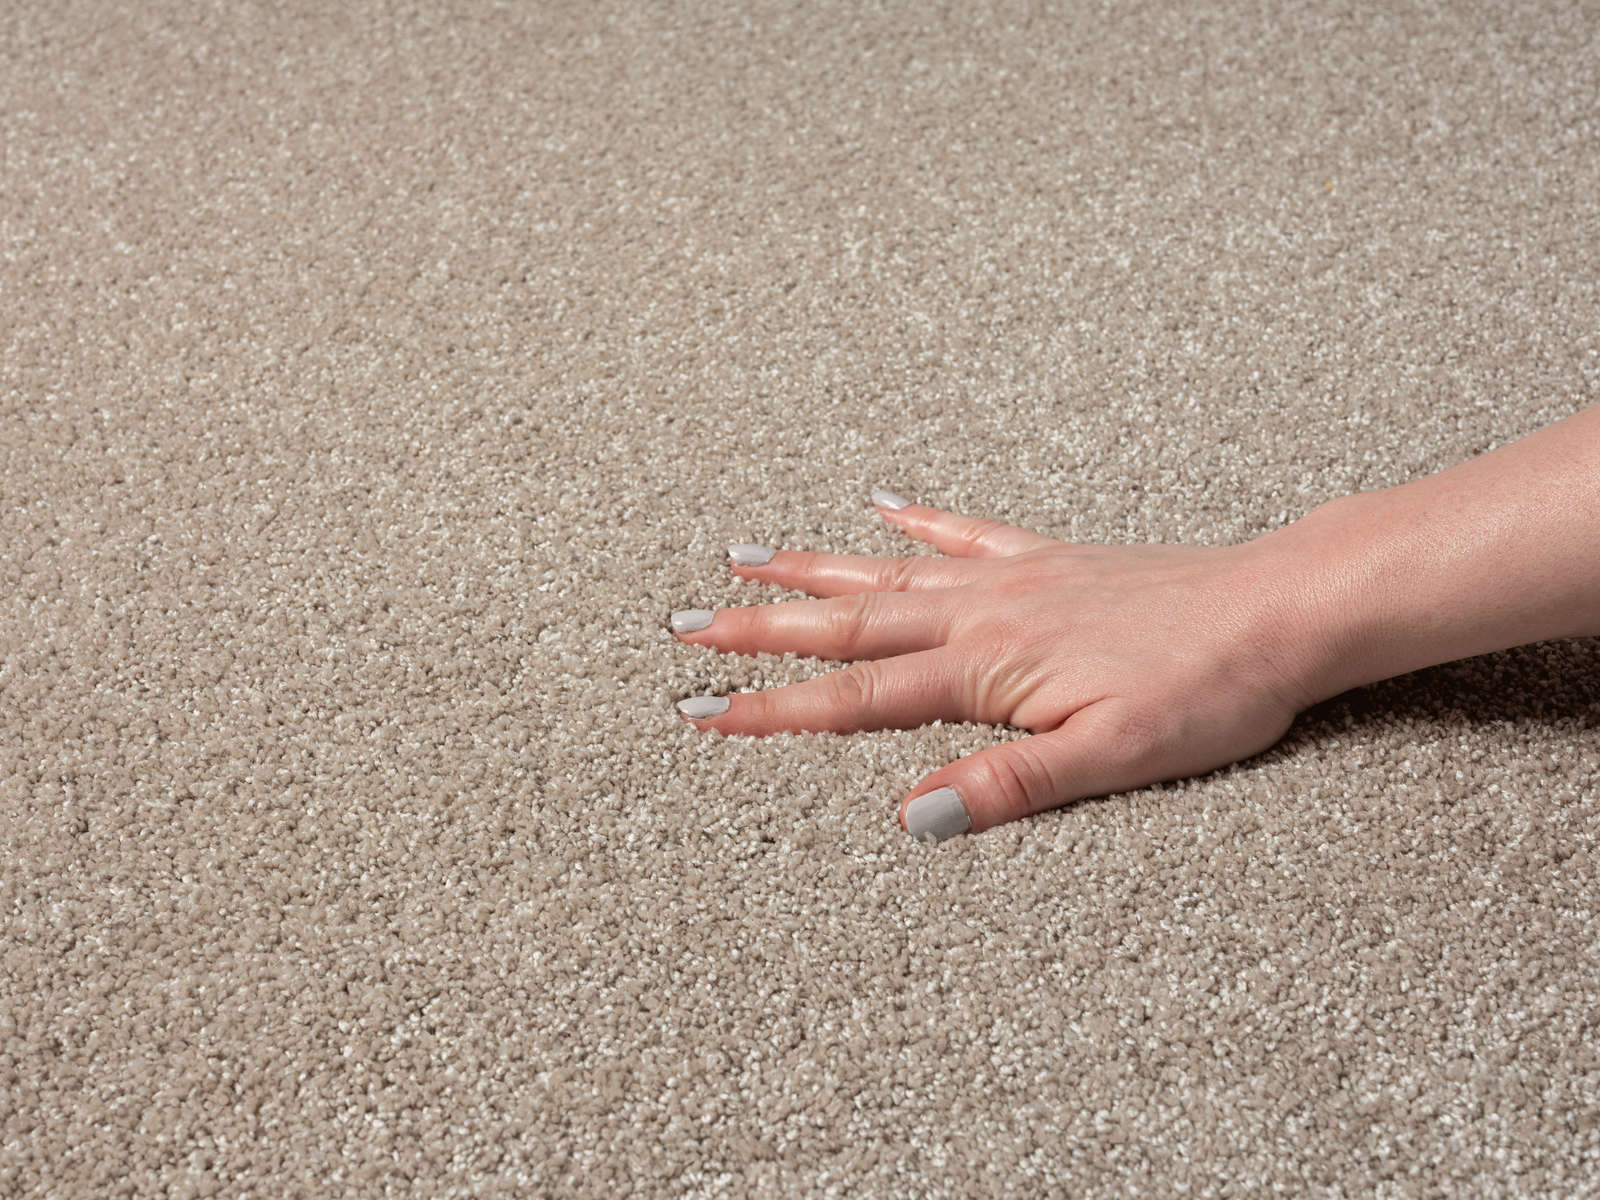             Soft short pile carpet in beige - 290 x 200 cm
        